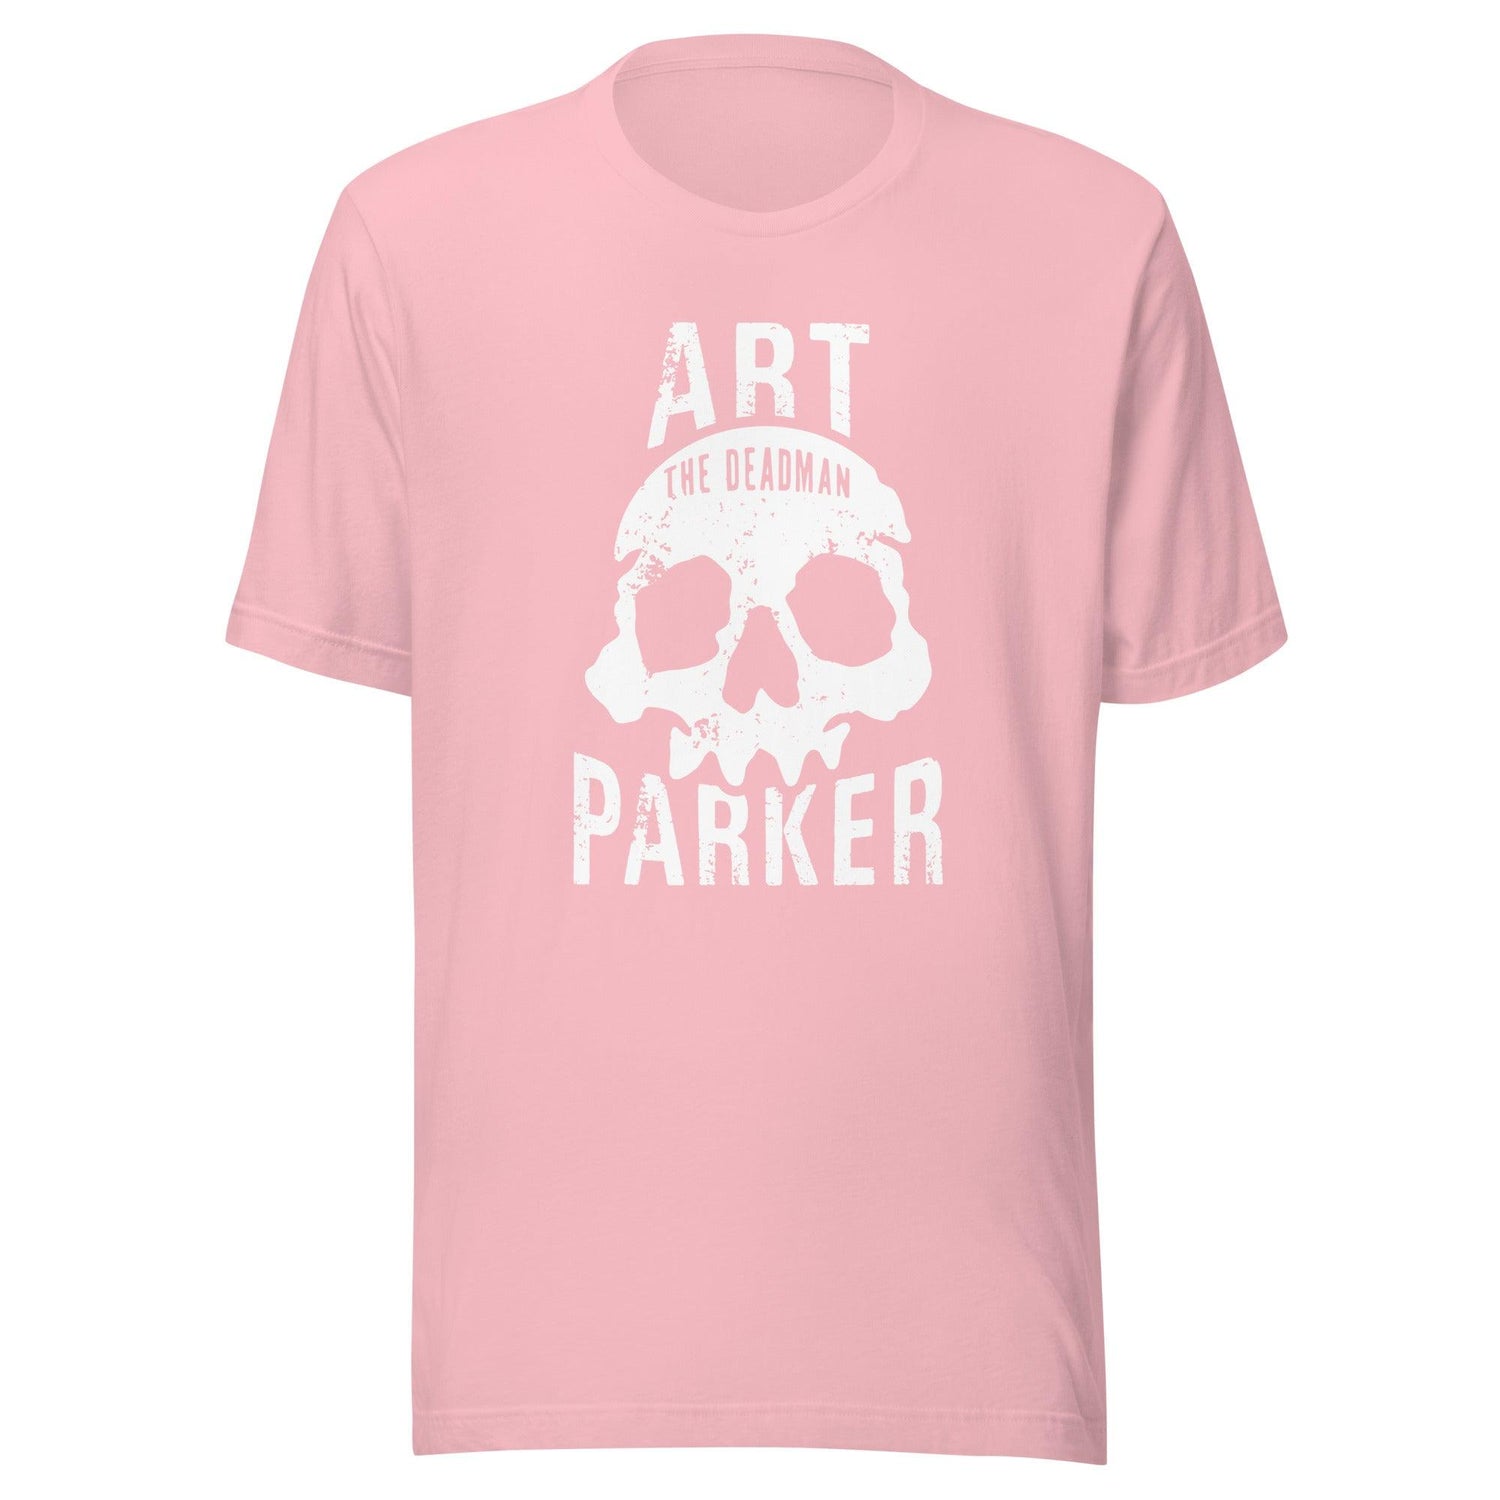 Art Parker "Deadman" t-shirt - Fan Arch